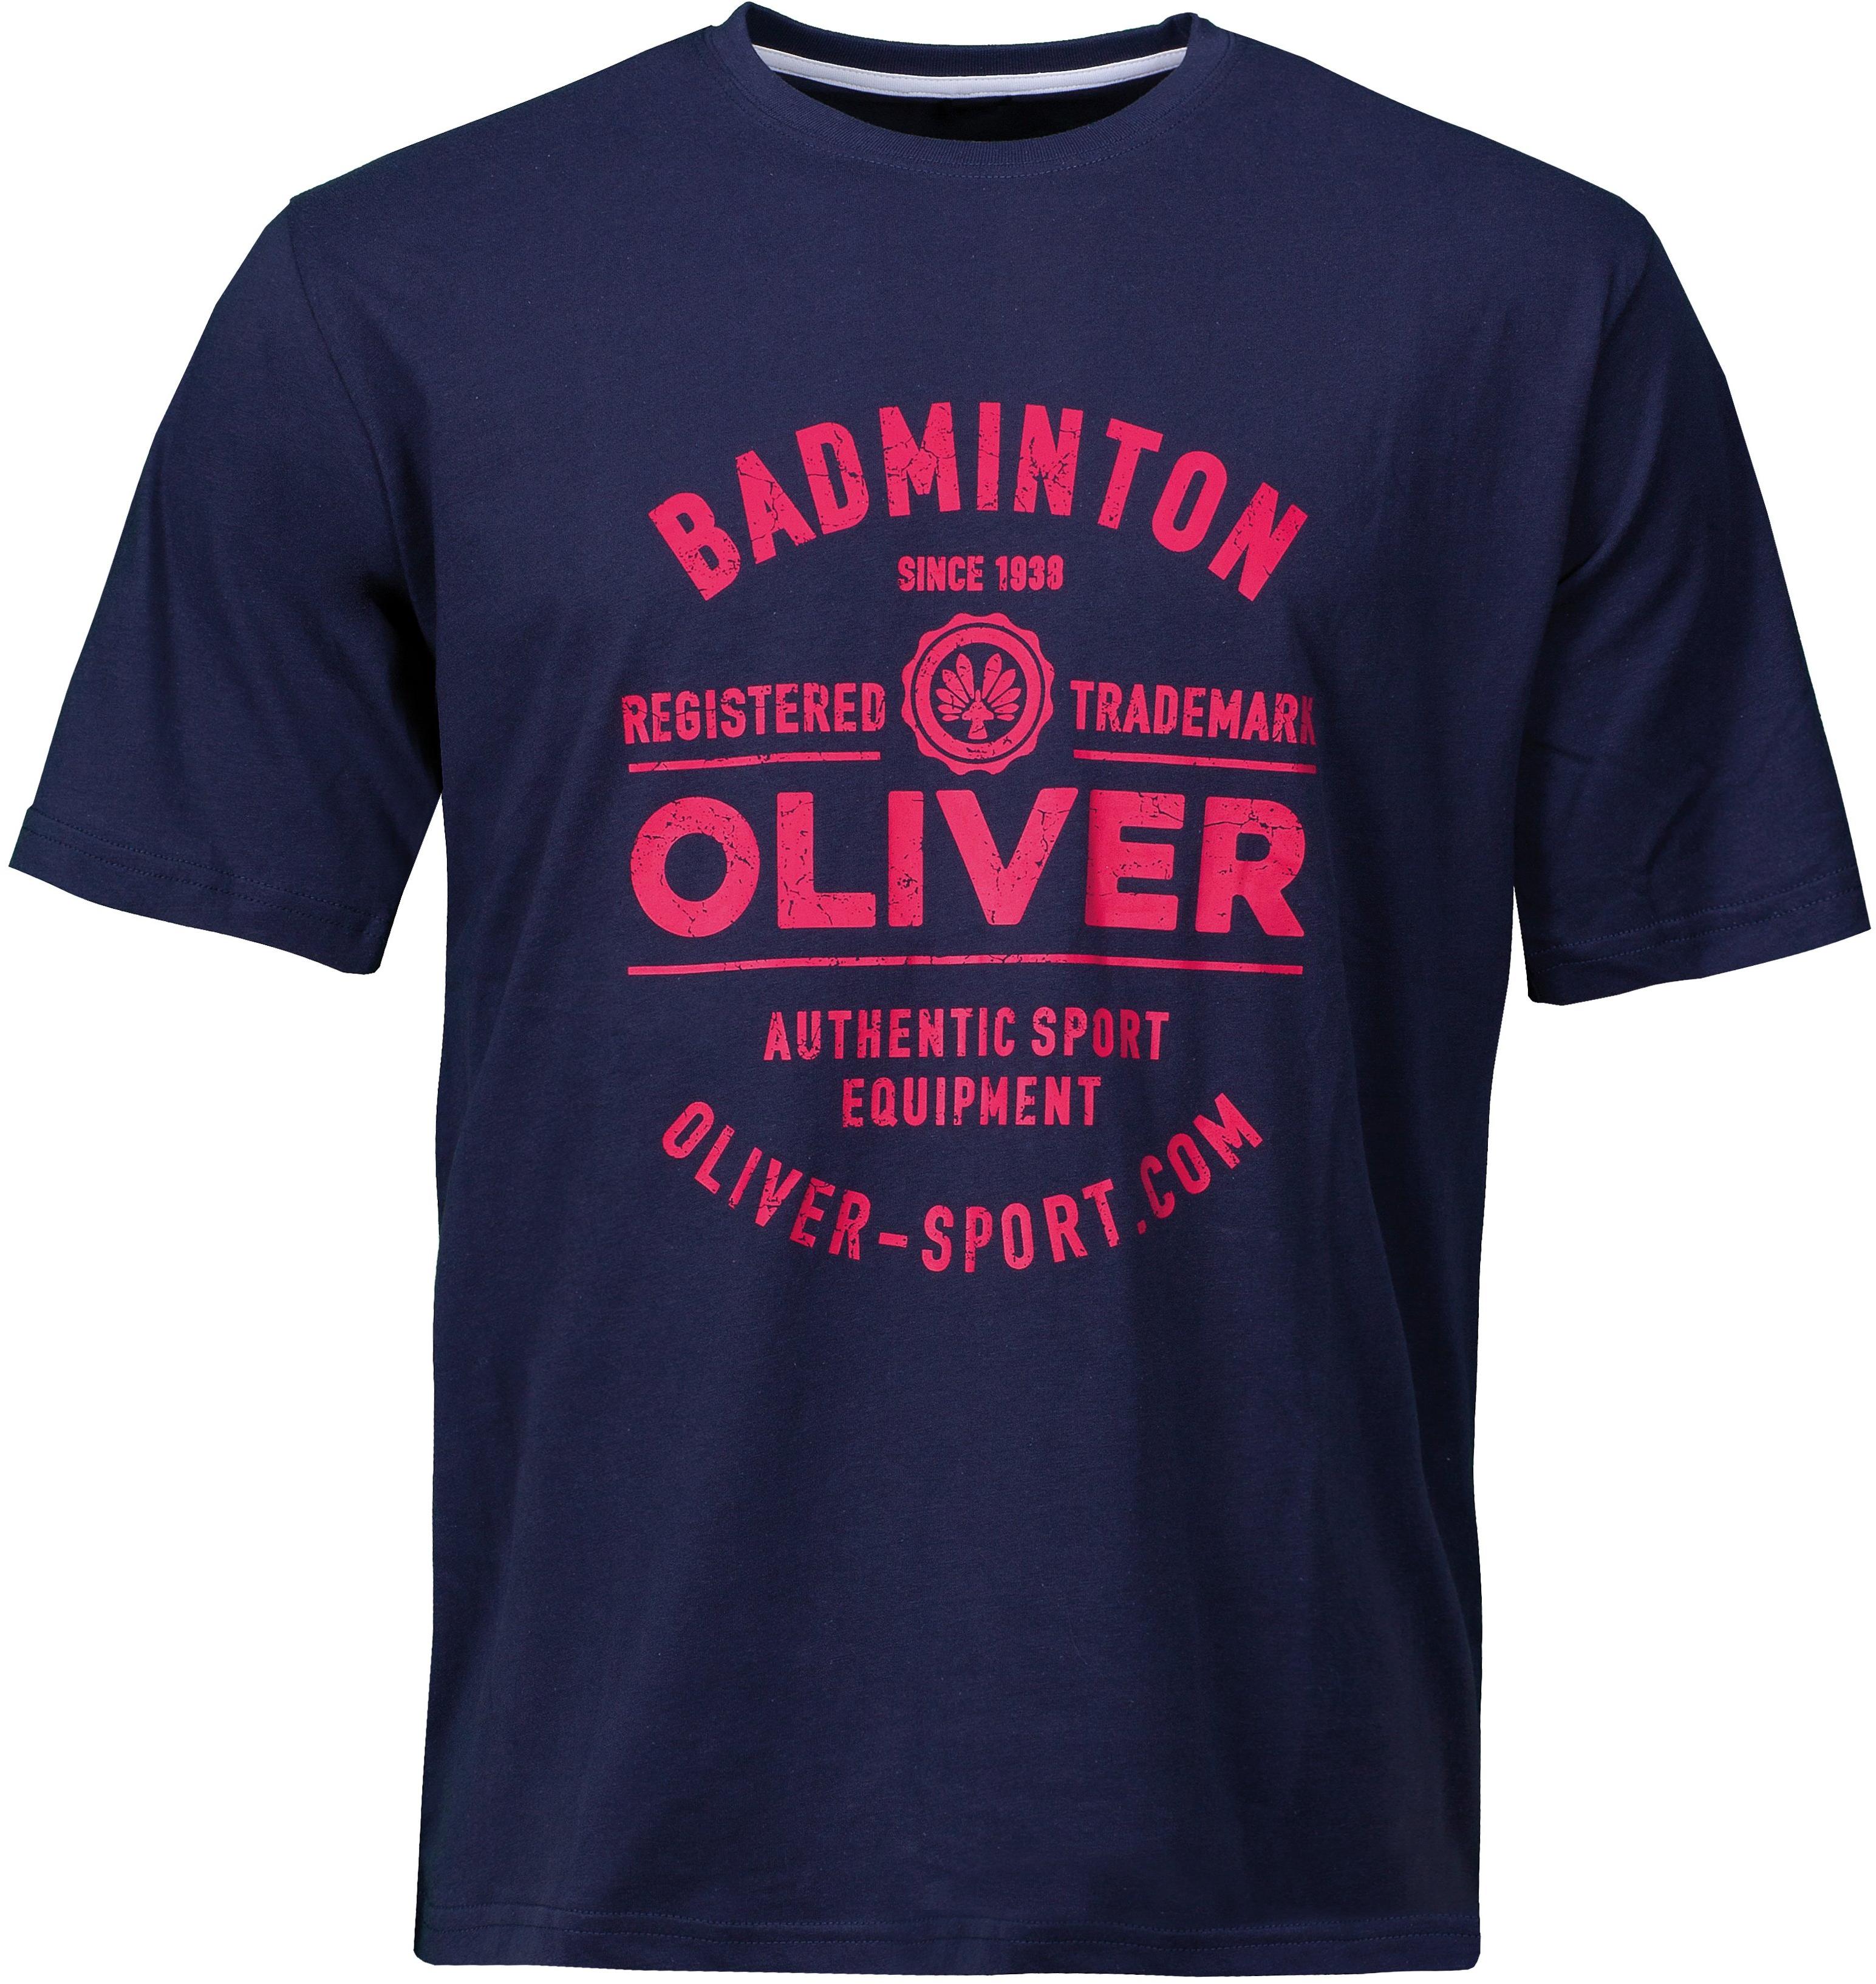 Oliver Badminton T-Shirt S